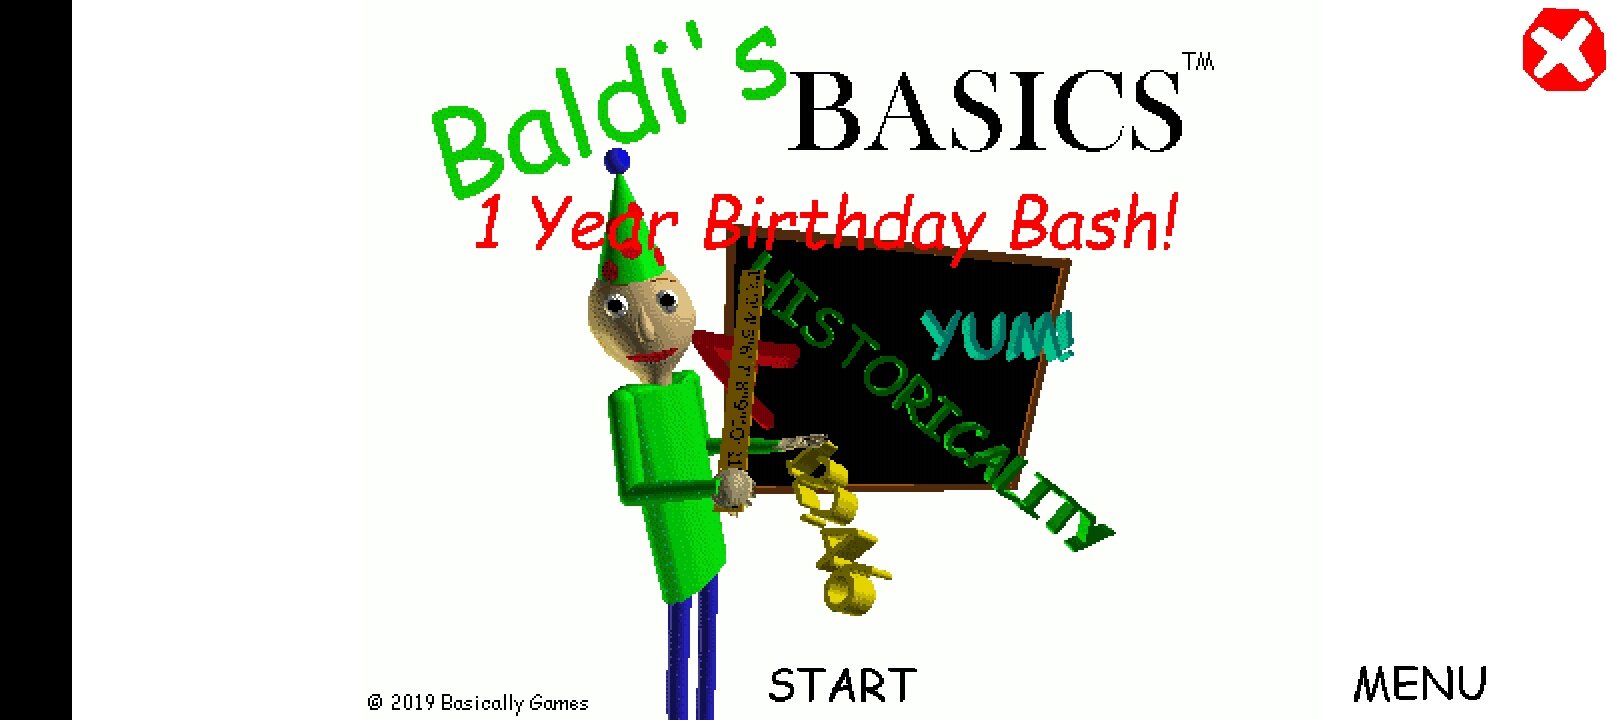 Baldi's Basics Birthday Bash